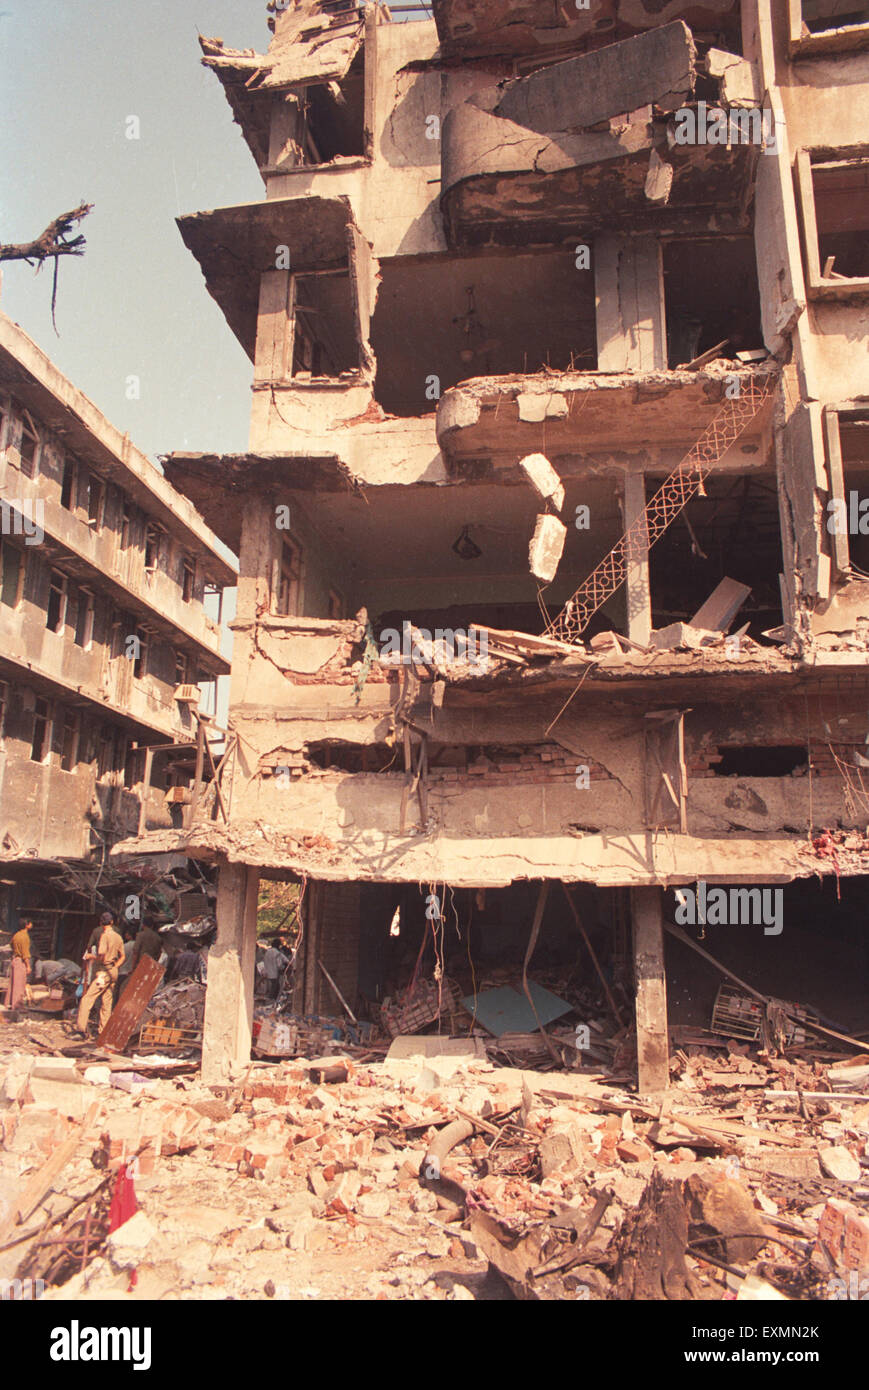 1993 mumbai blast hi-res stock photography and images - Alamy